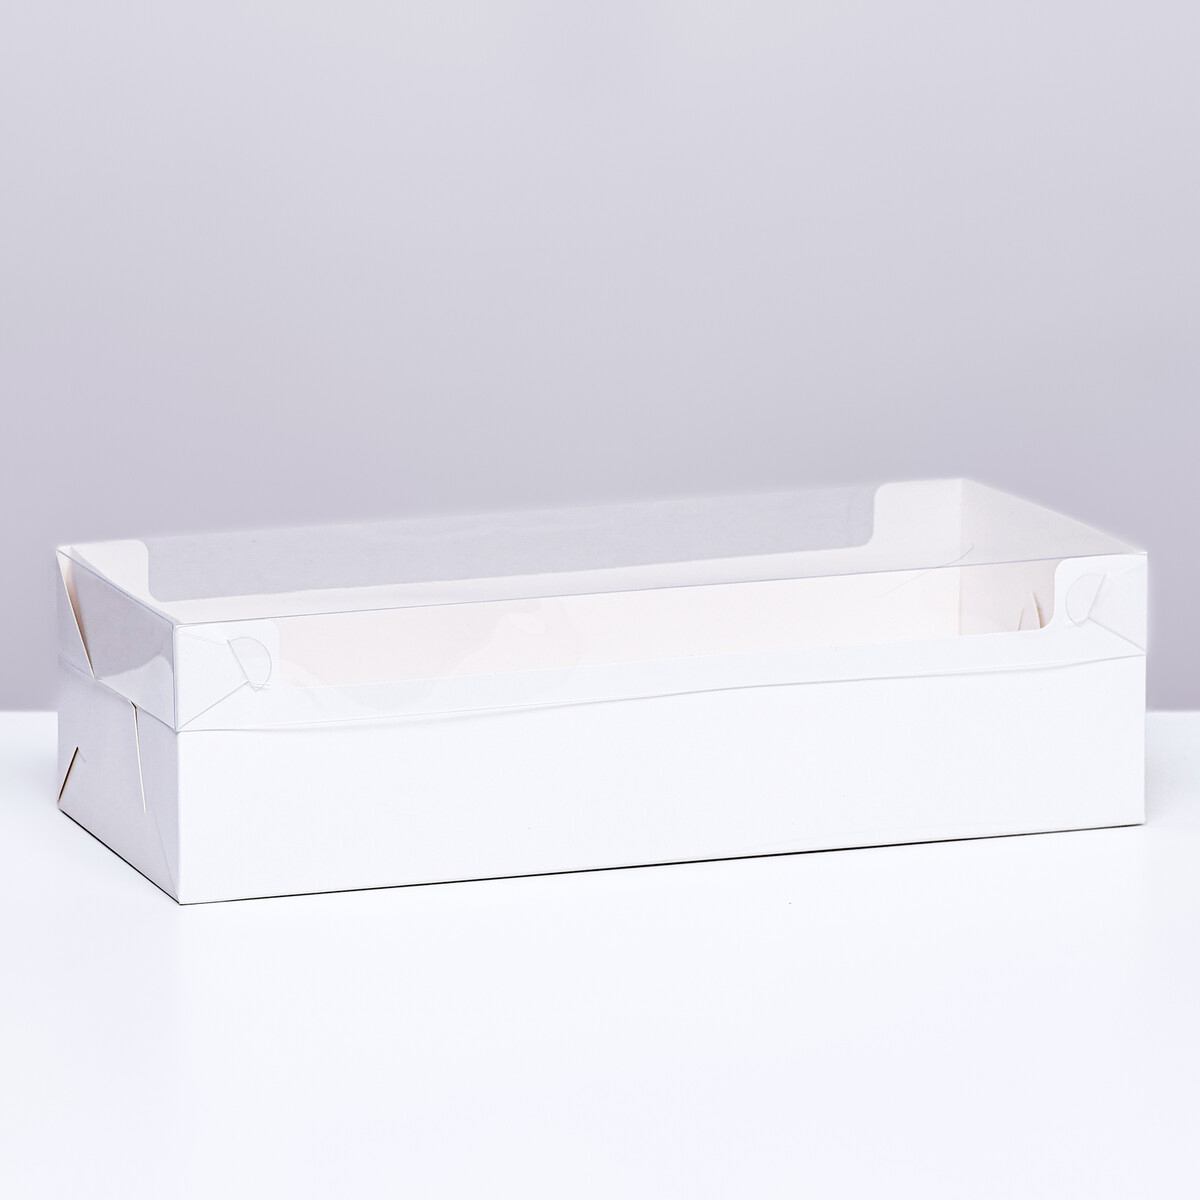 Коробка под рулет белая, 30 х 11 х 8 см коробка под рулет с ручками белая 27 5 х 11 х 10 см